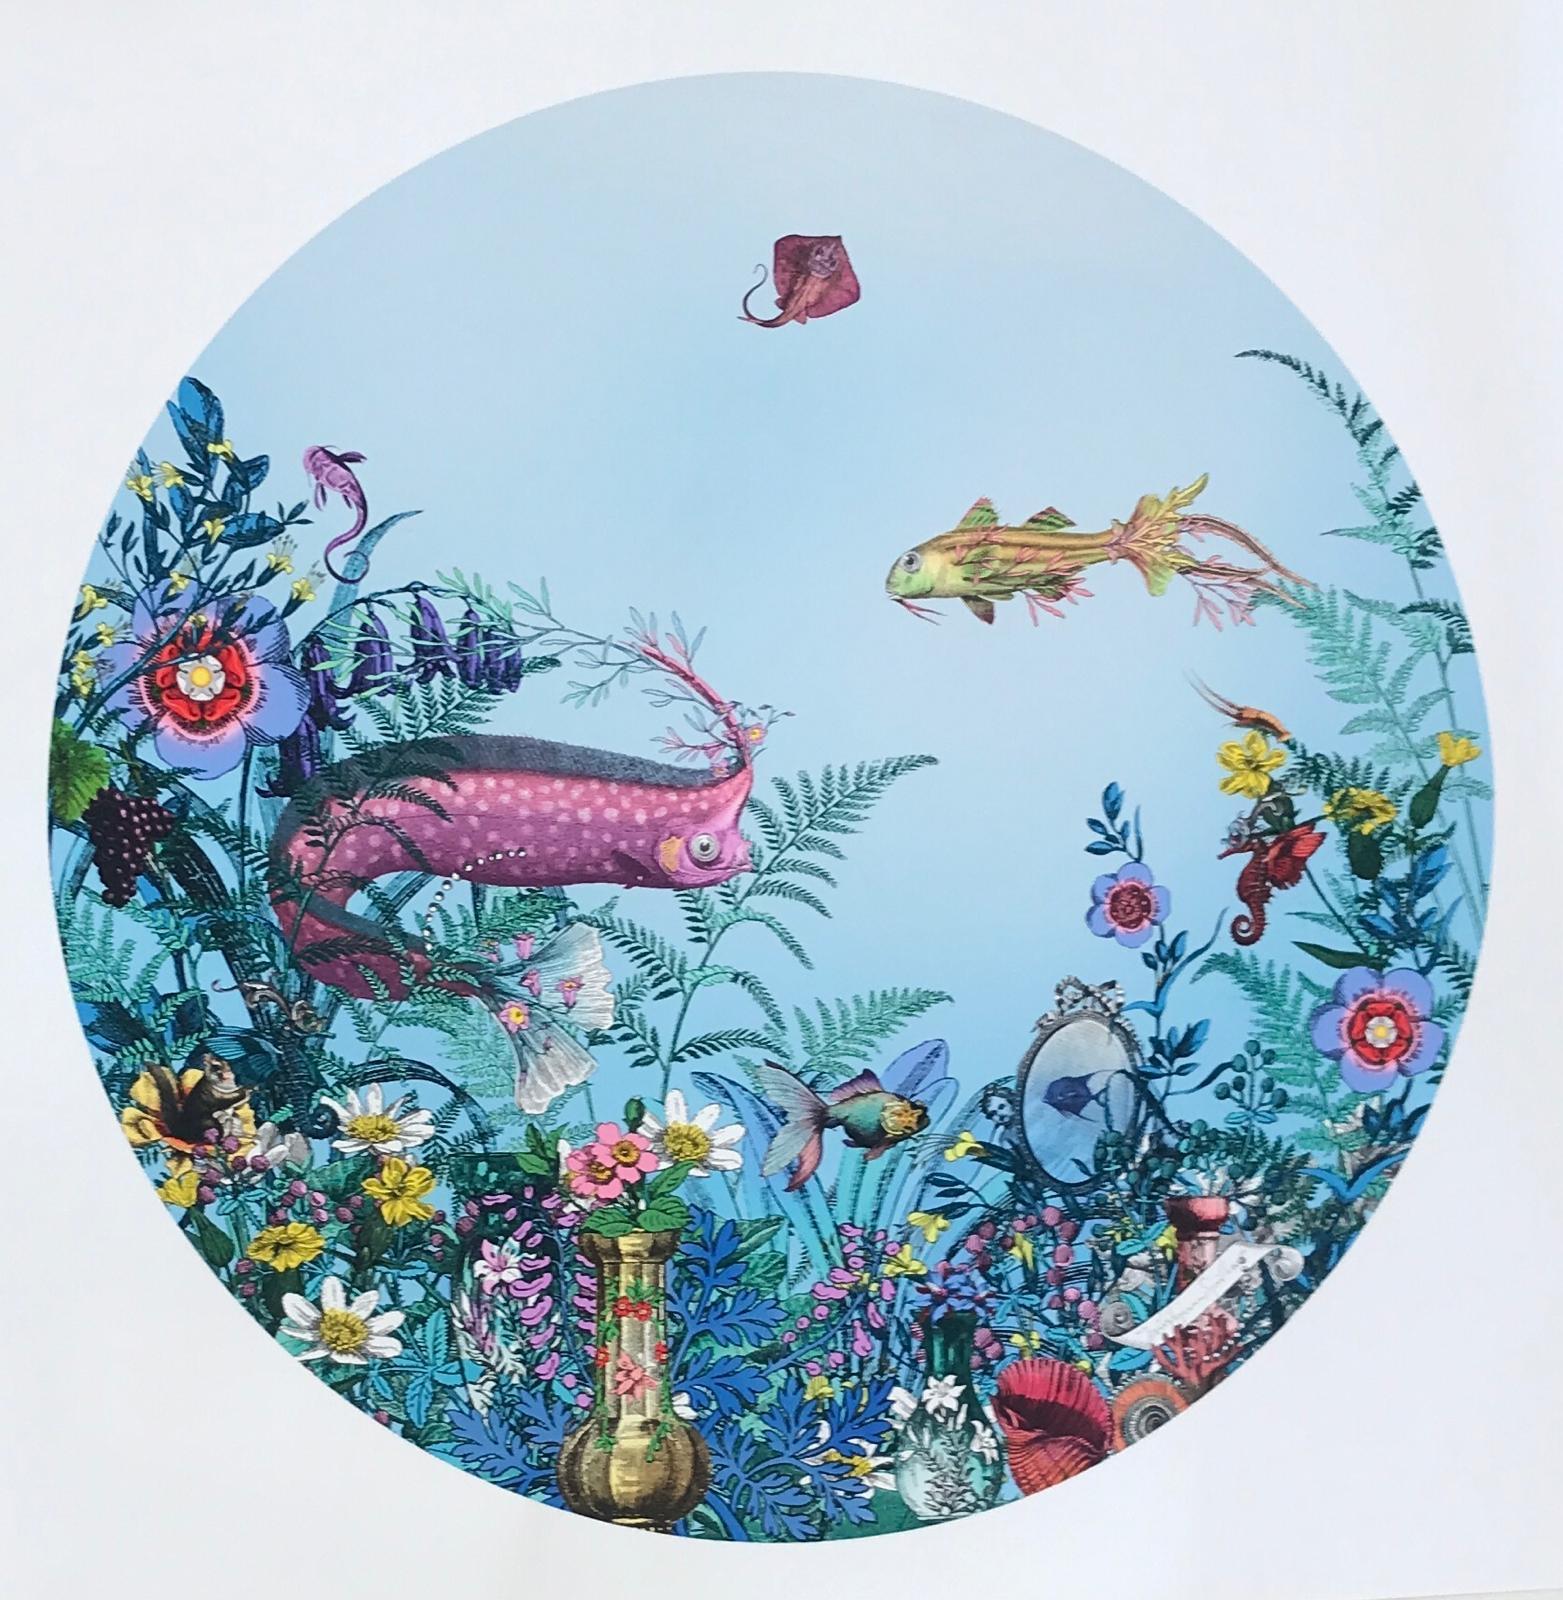 Kristjana Williams Animal Print - Fiskur Ne Thari - Circular Sea Born, Giclee Ink Print, Fish, Ocean, Fantasy